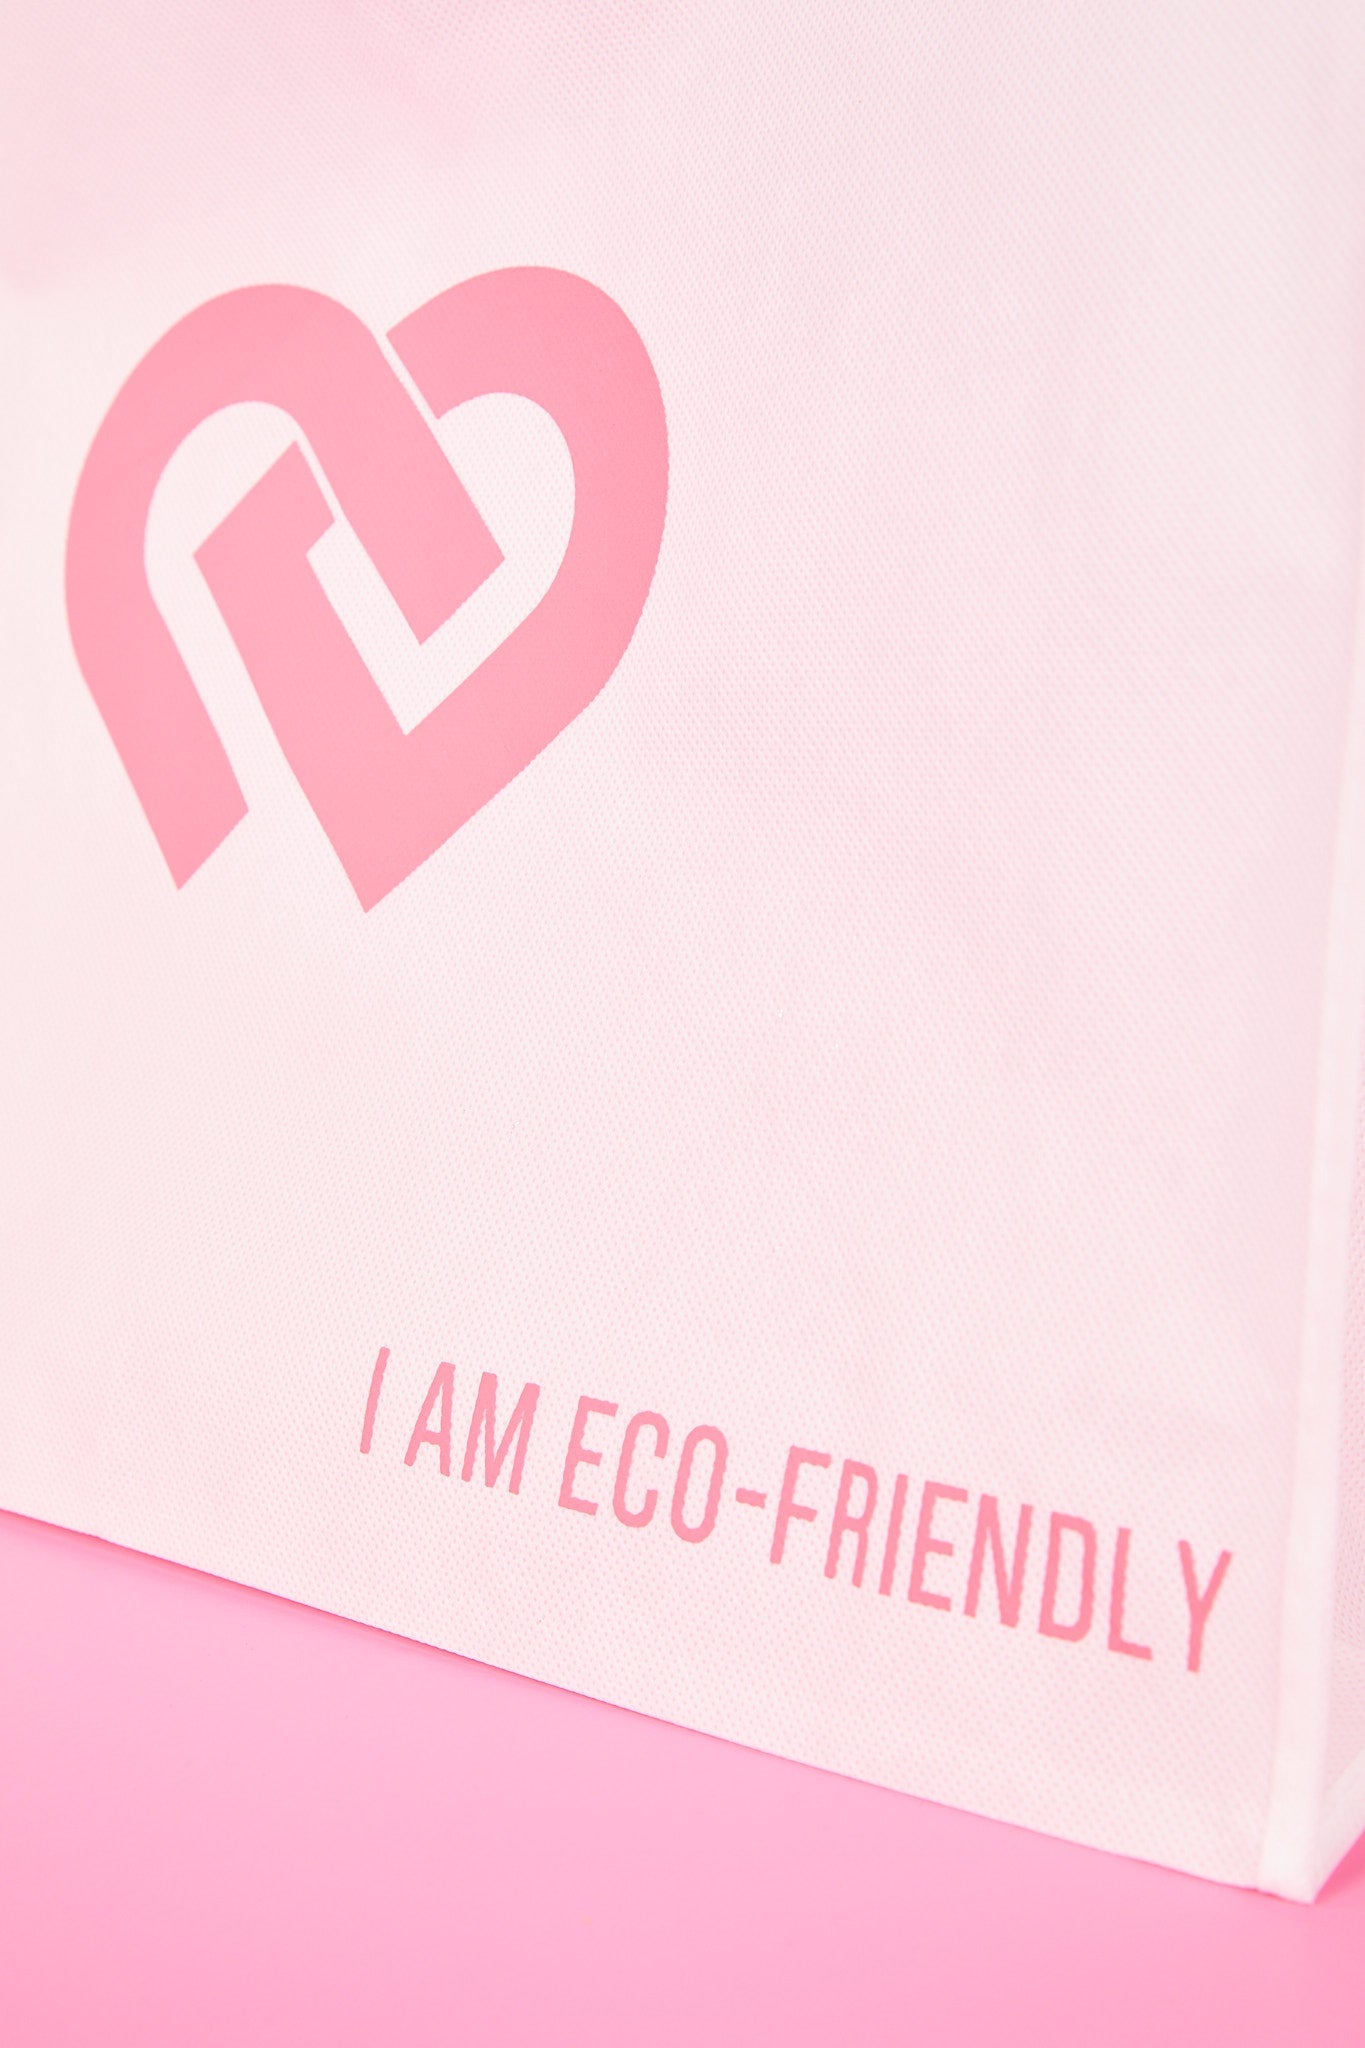 Eco Friendly Tote Bag - Claudia Dean World